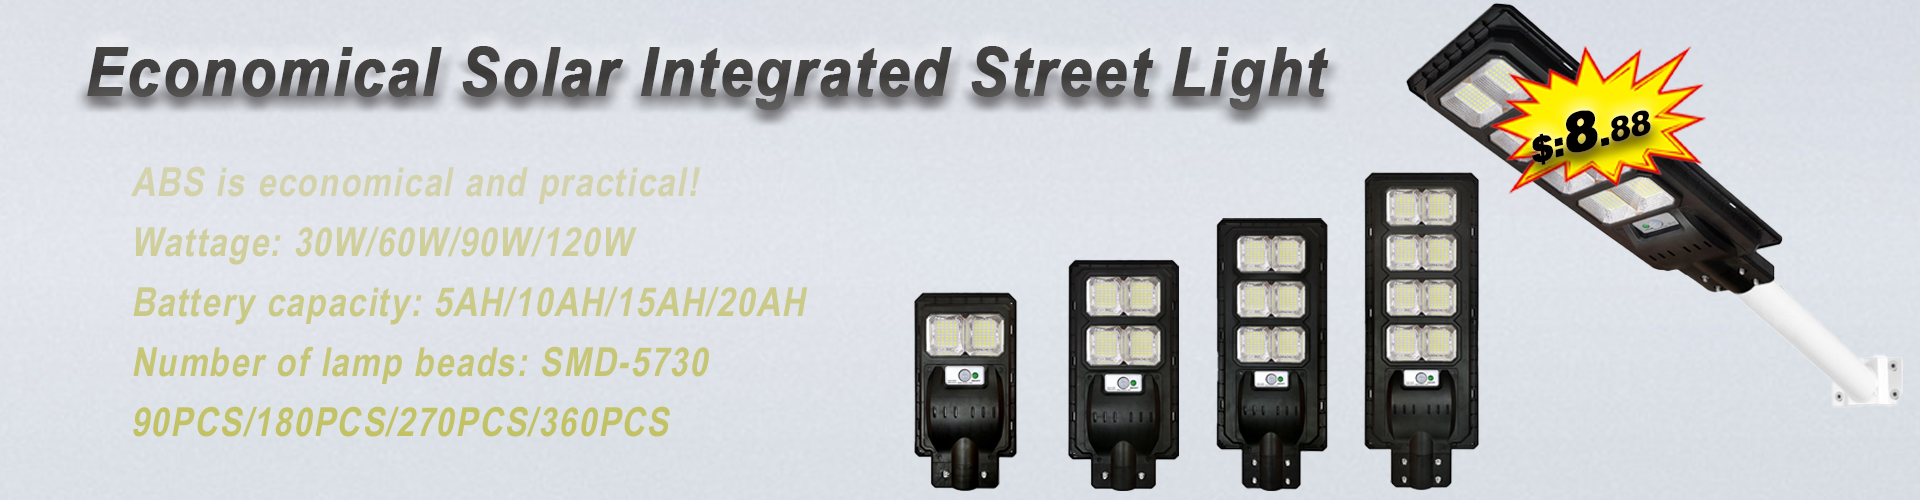 Economical solar integrated street light